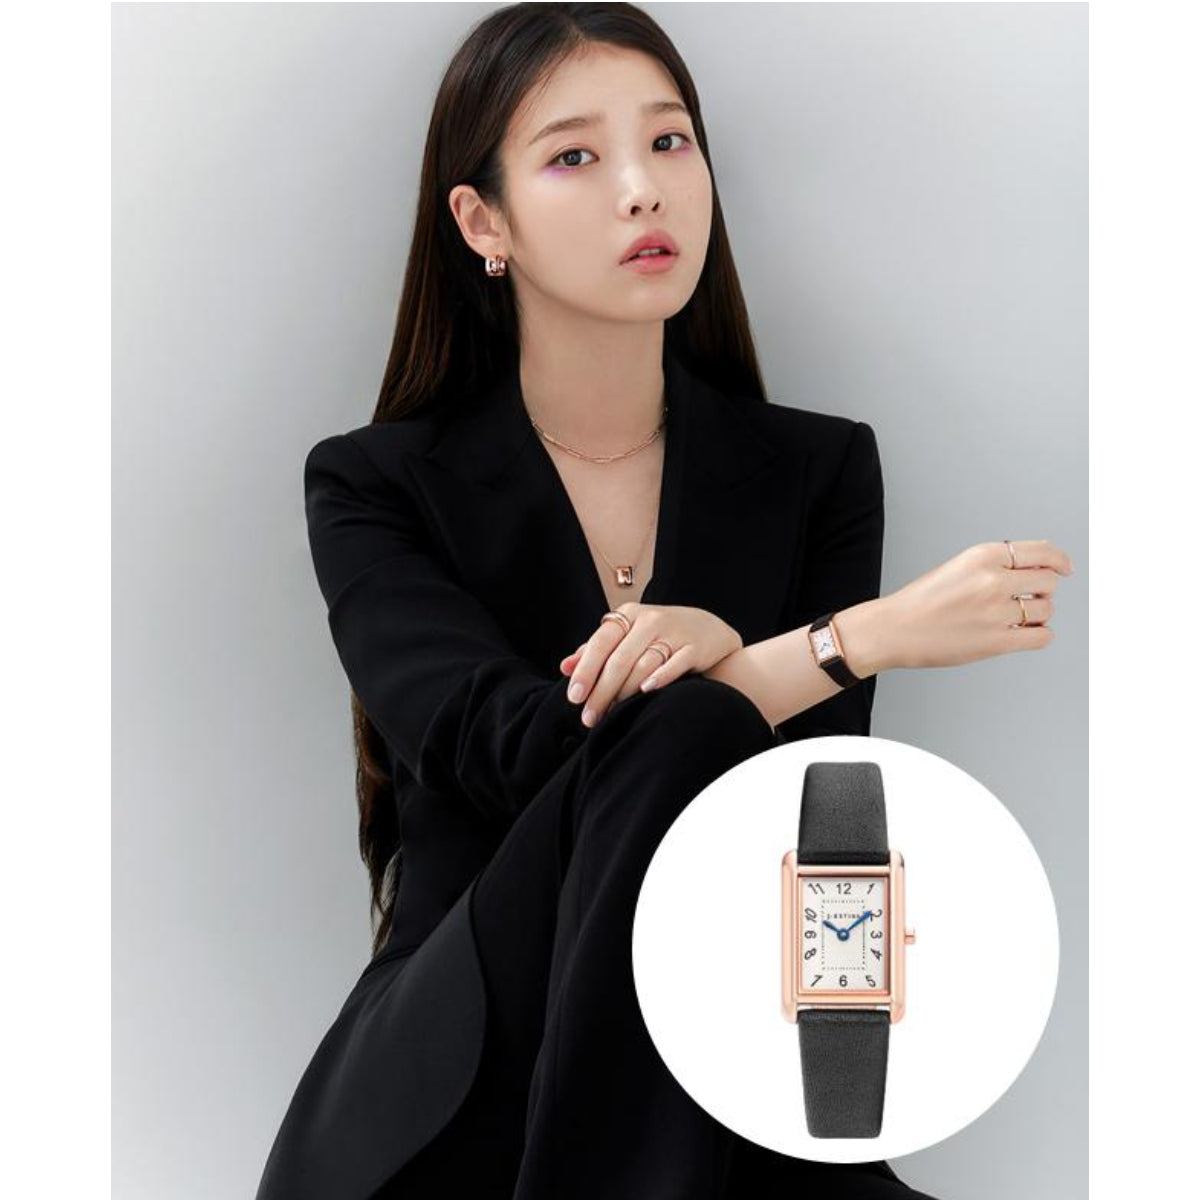 J.ESTINA Nuovo Tempo Leather Watch IU Pick Analog Watch Black Gold Made in Korea / from Seoul, Korea